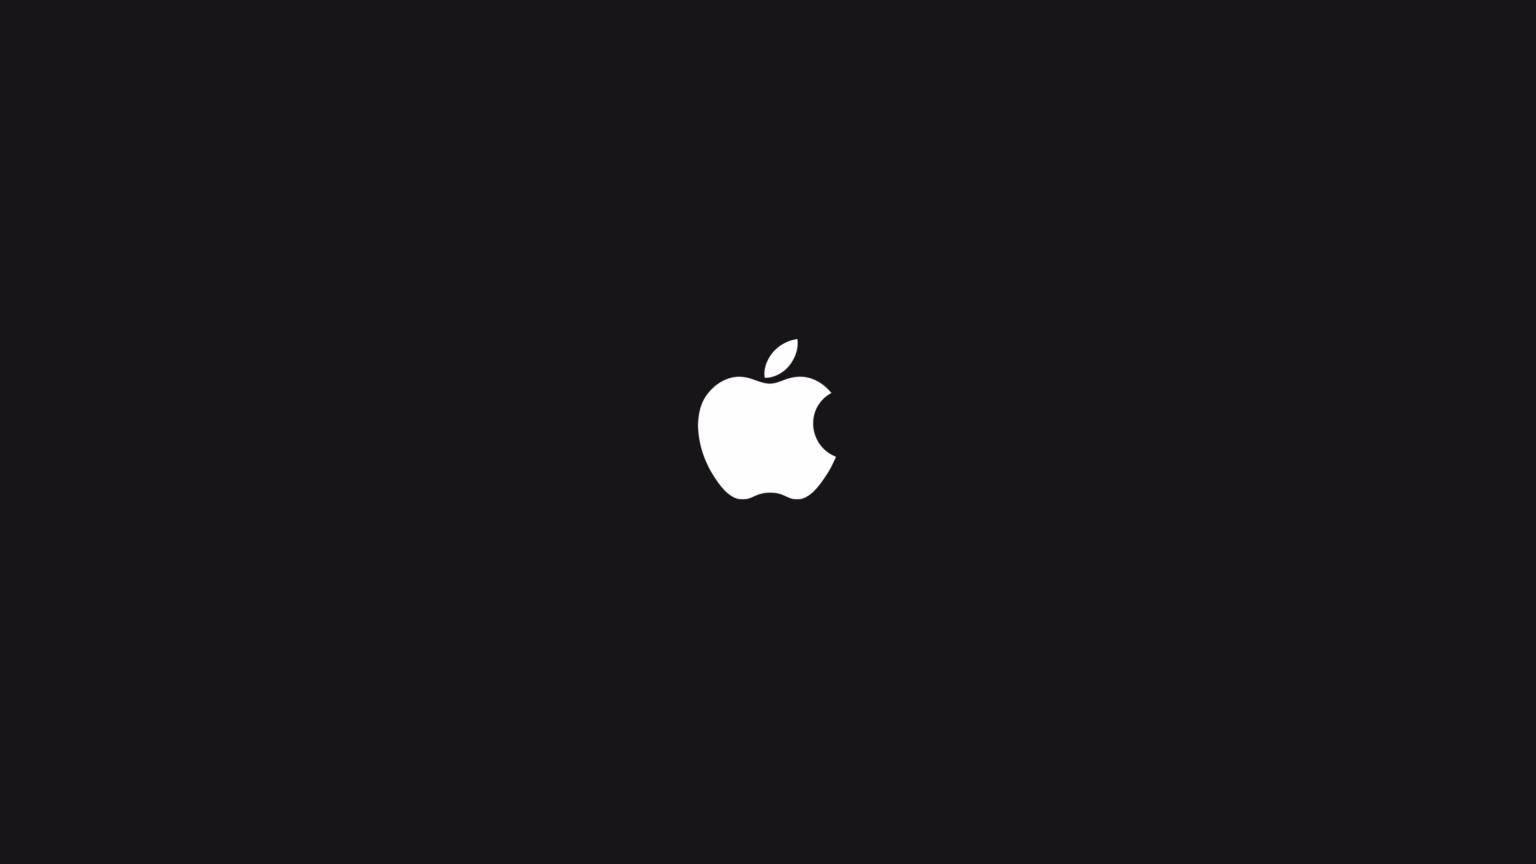 Apple Logo 4k On Dark Bagground Wallpaper